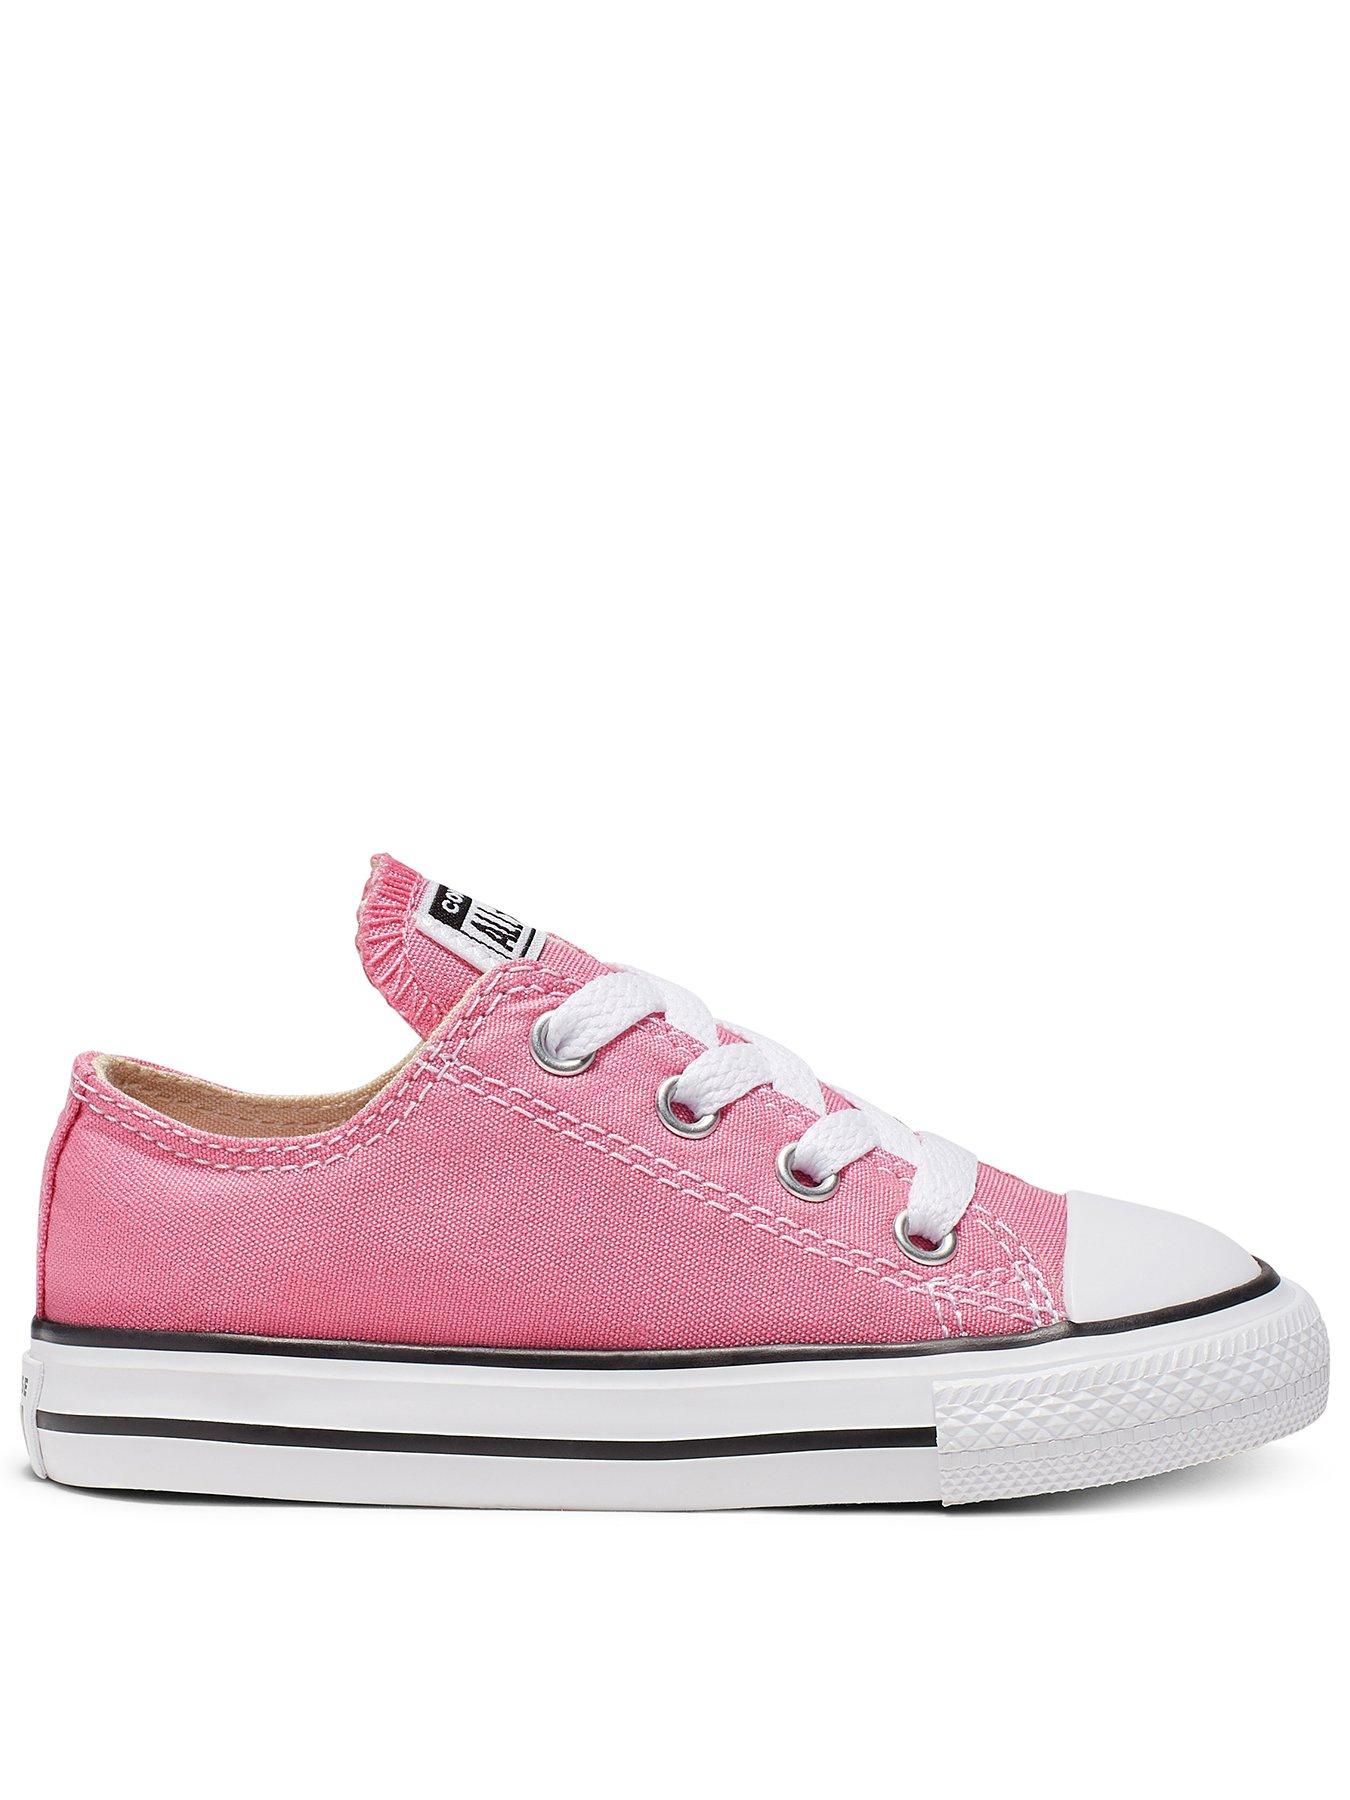 pink converse uk